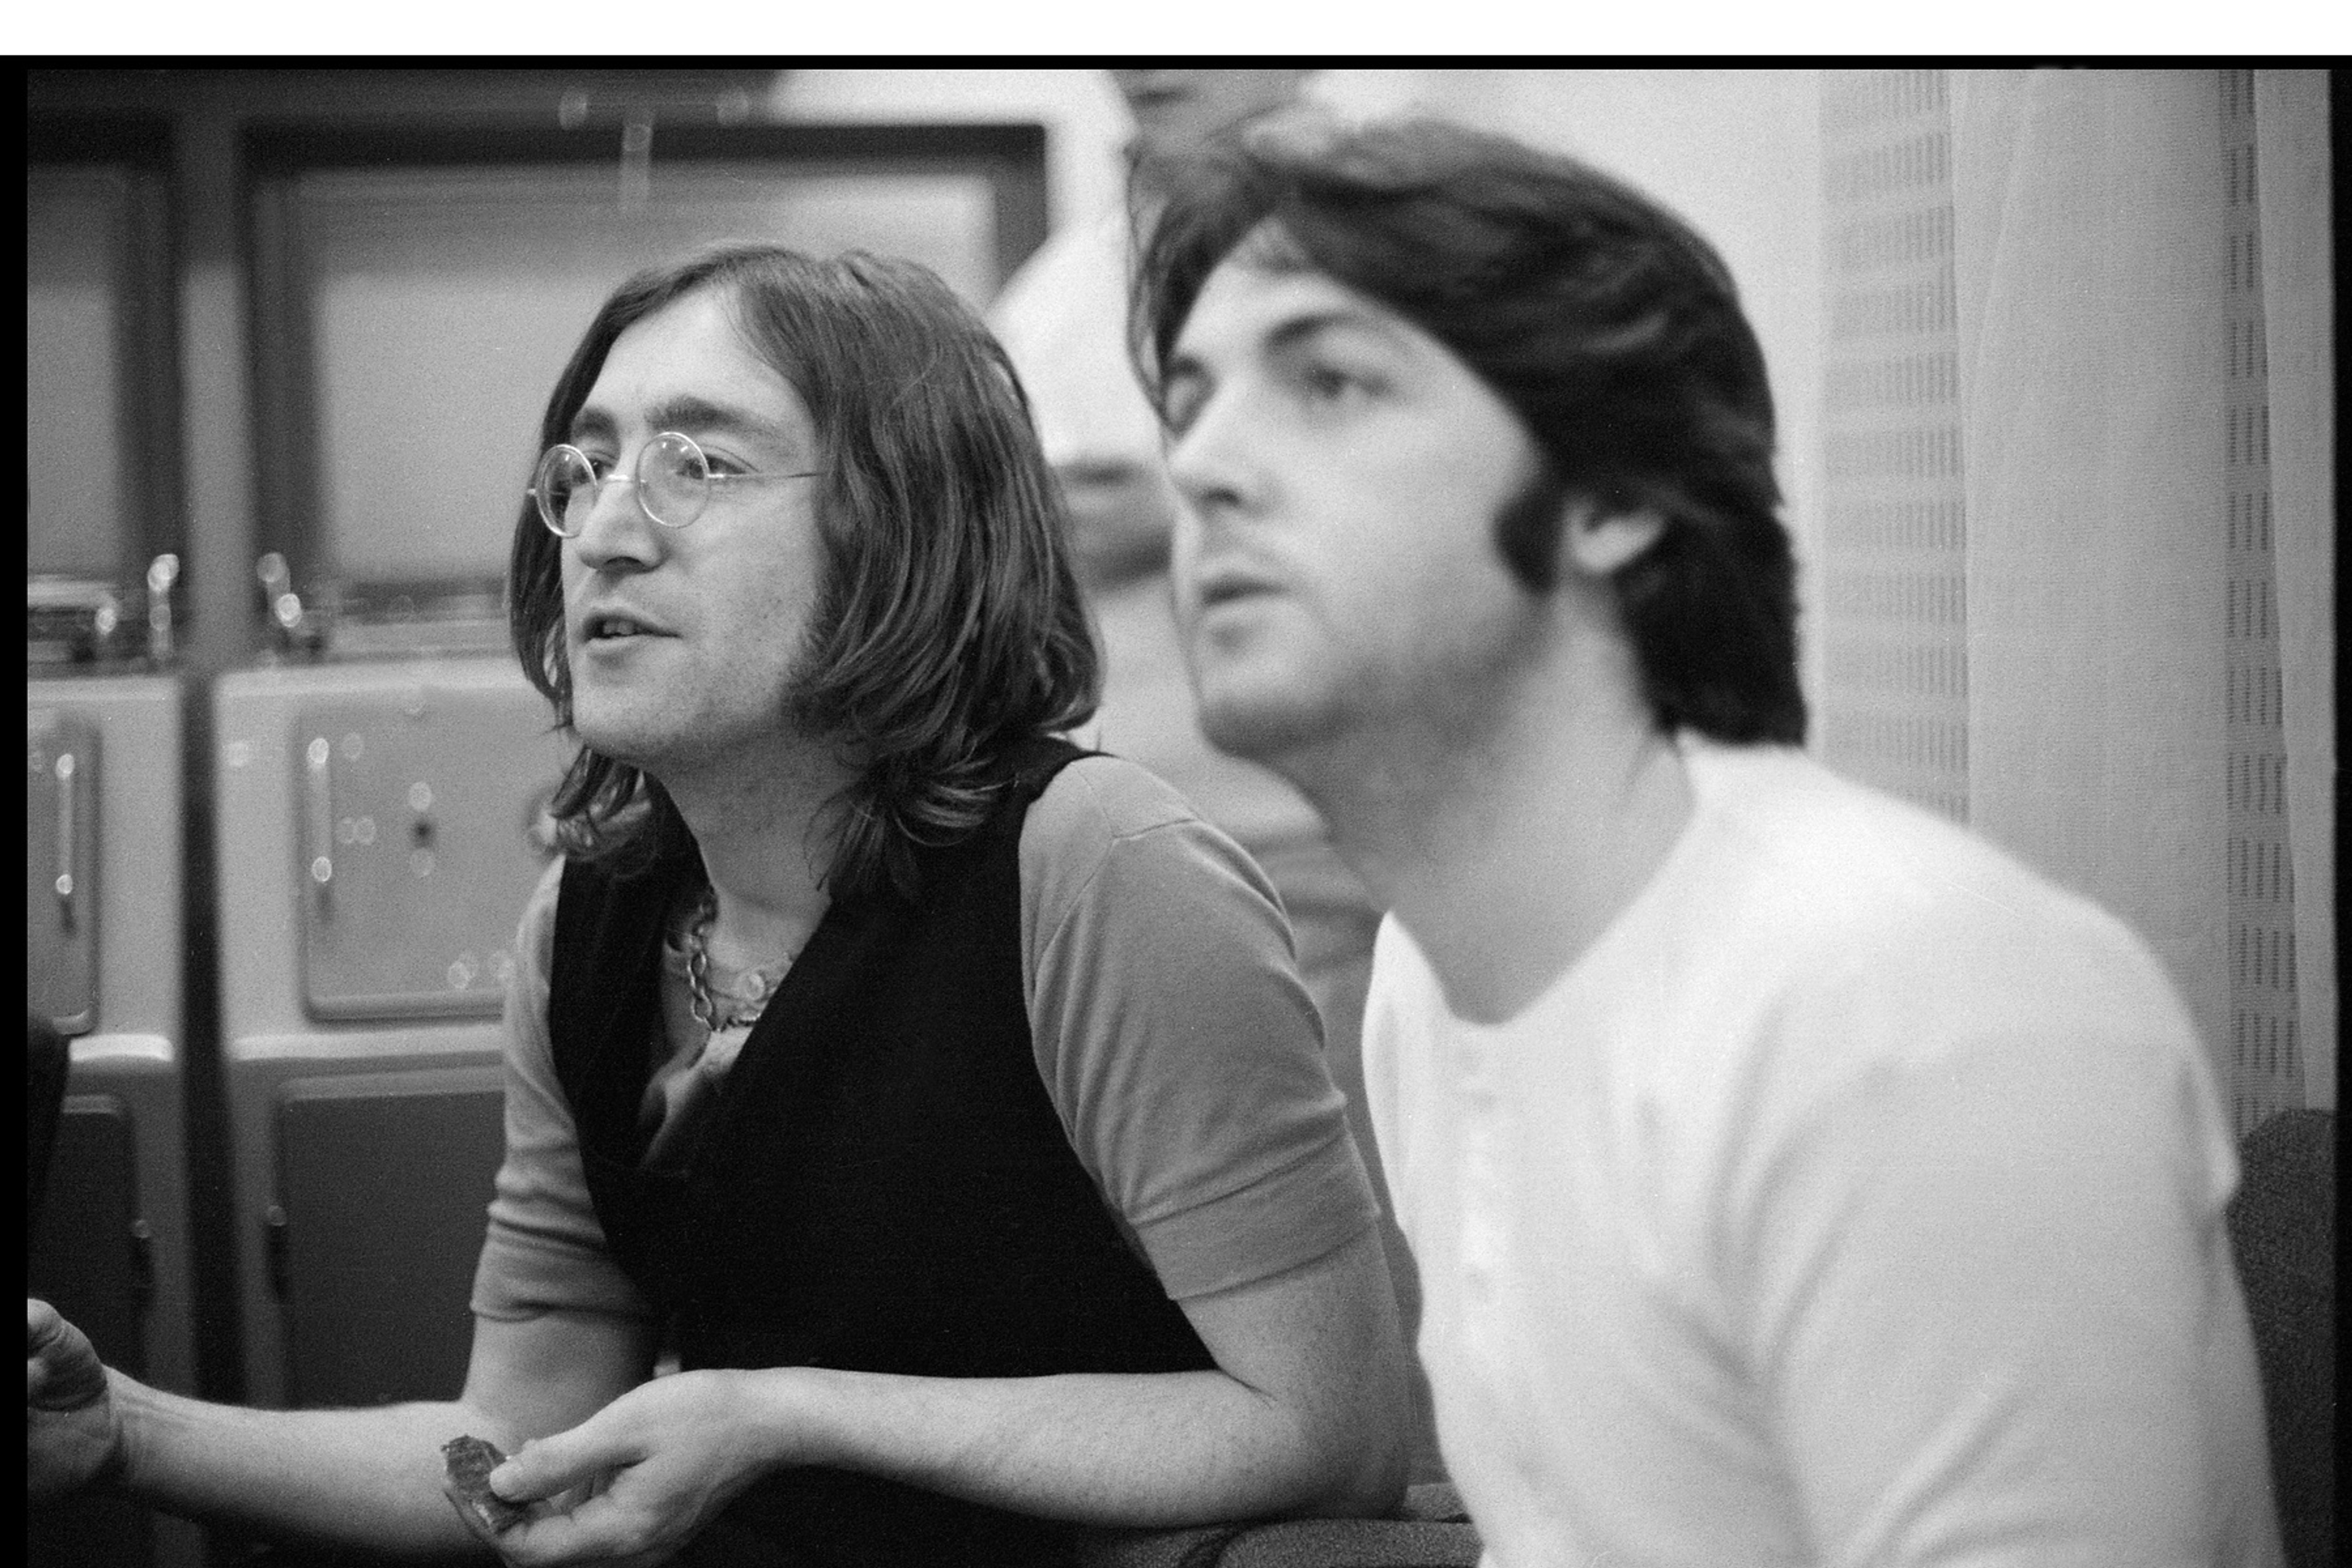 Black and white photo of John Lennon and Paul McCartney